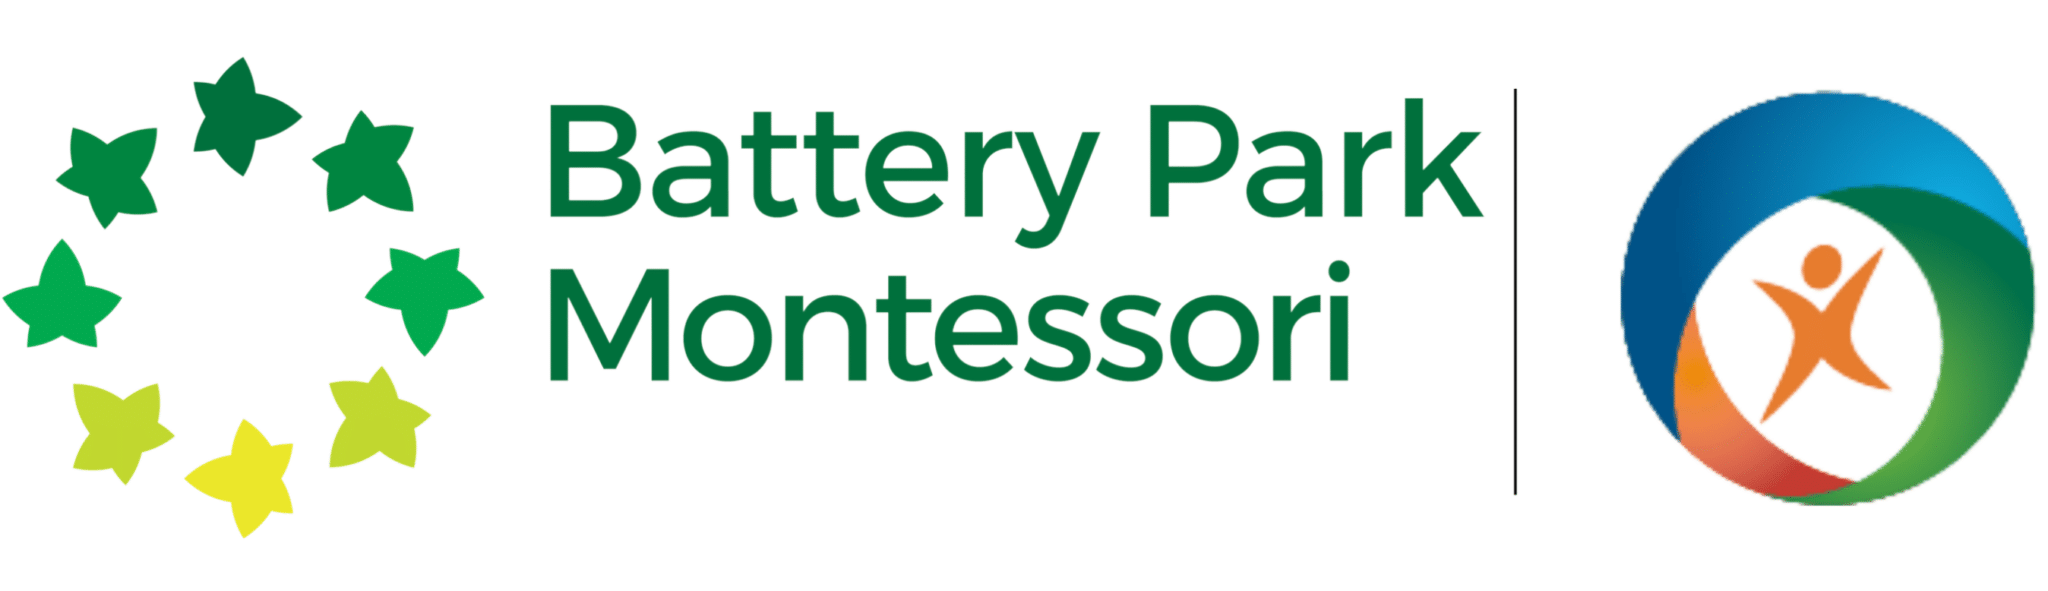 battery park montessori logo